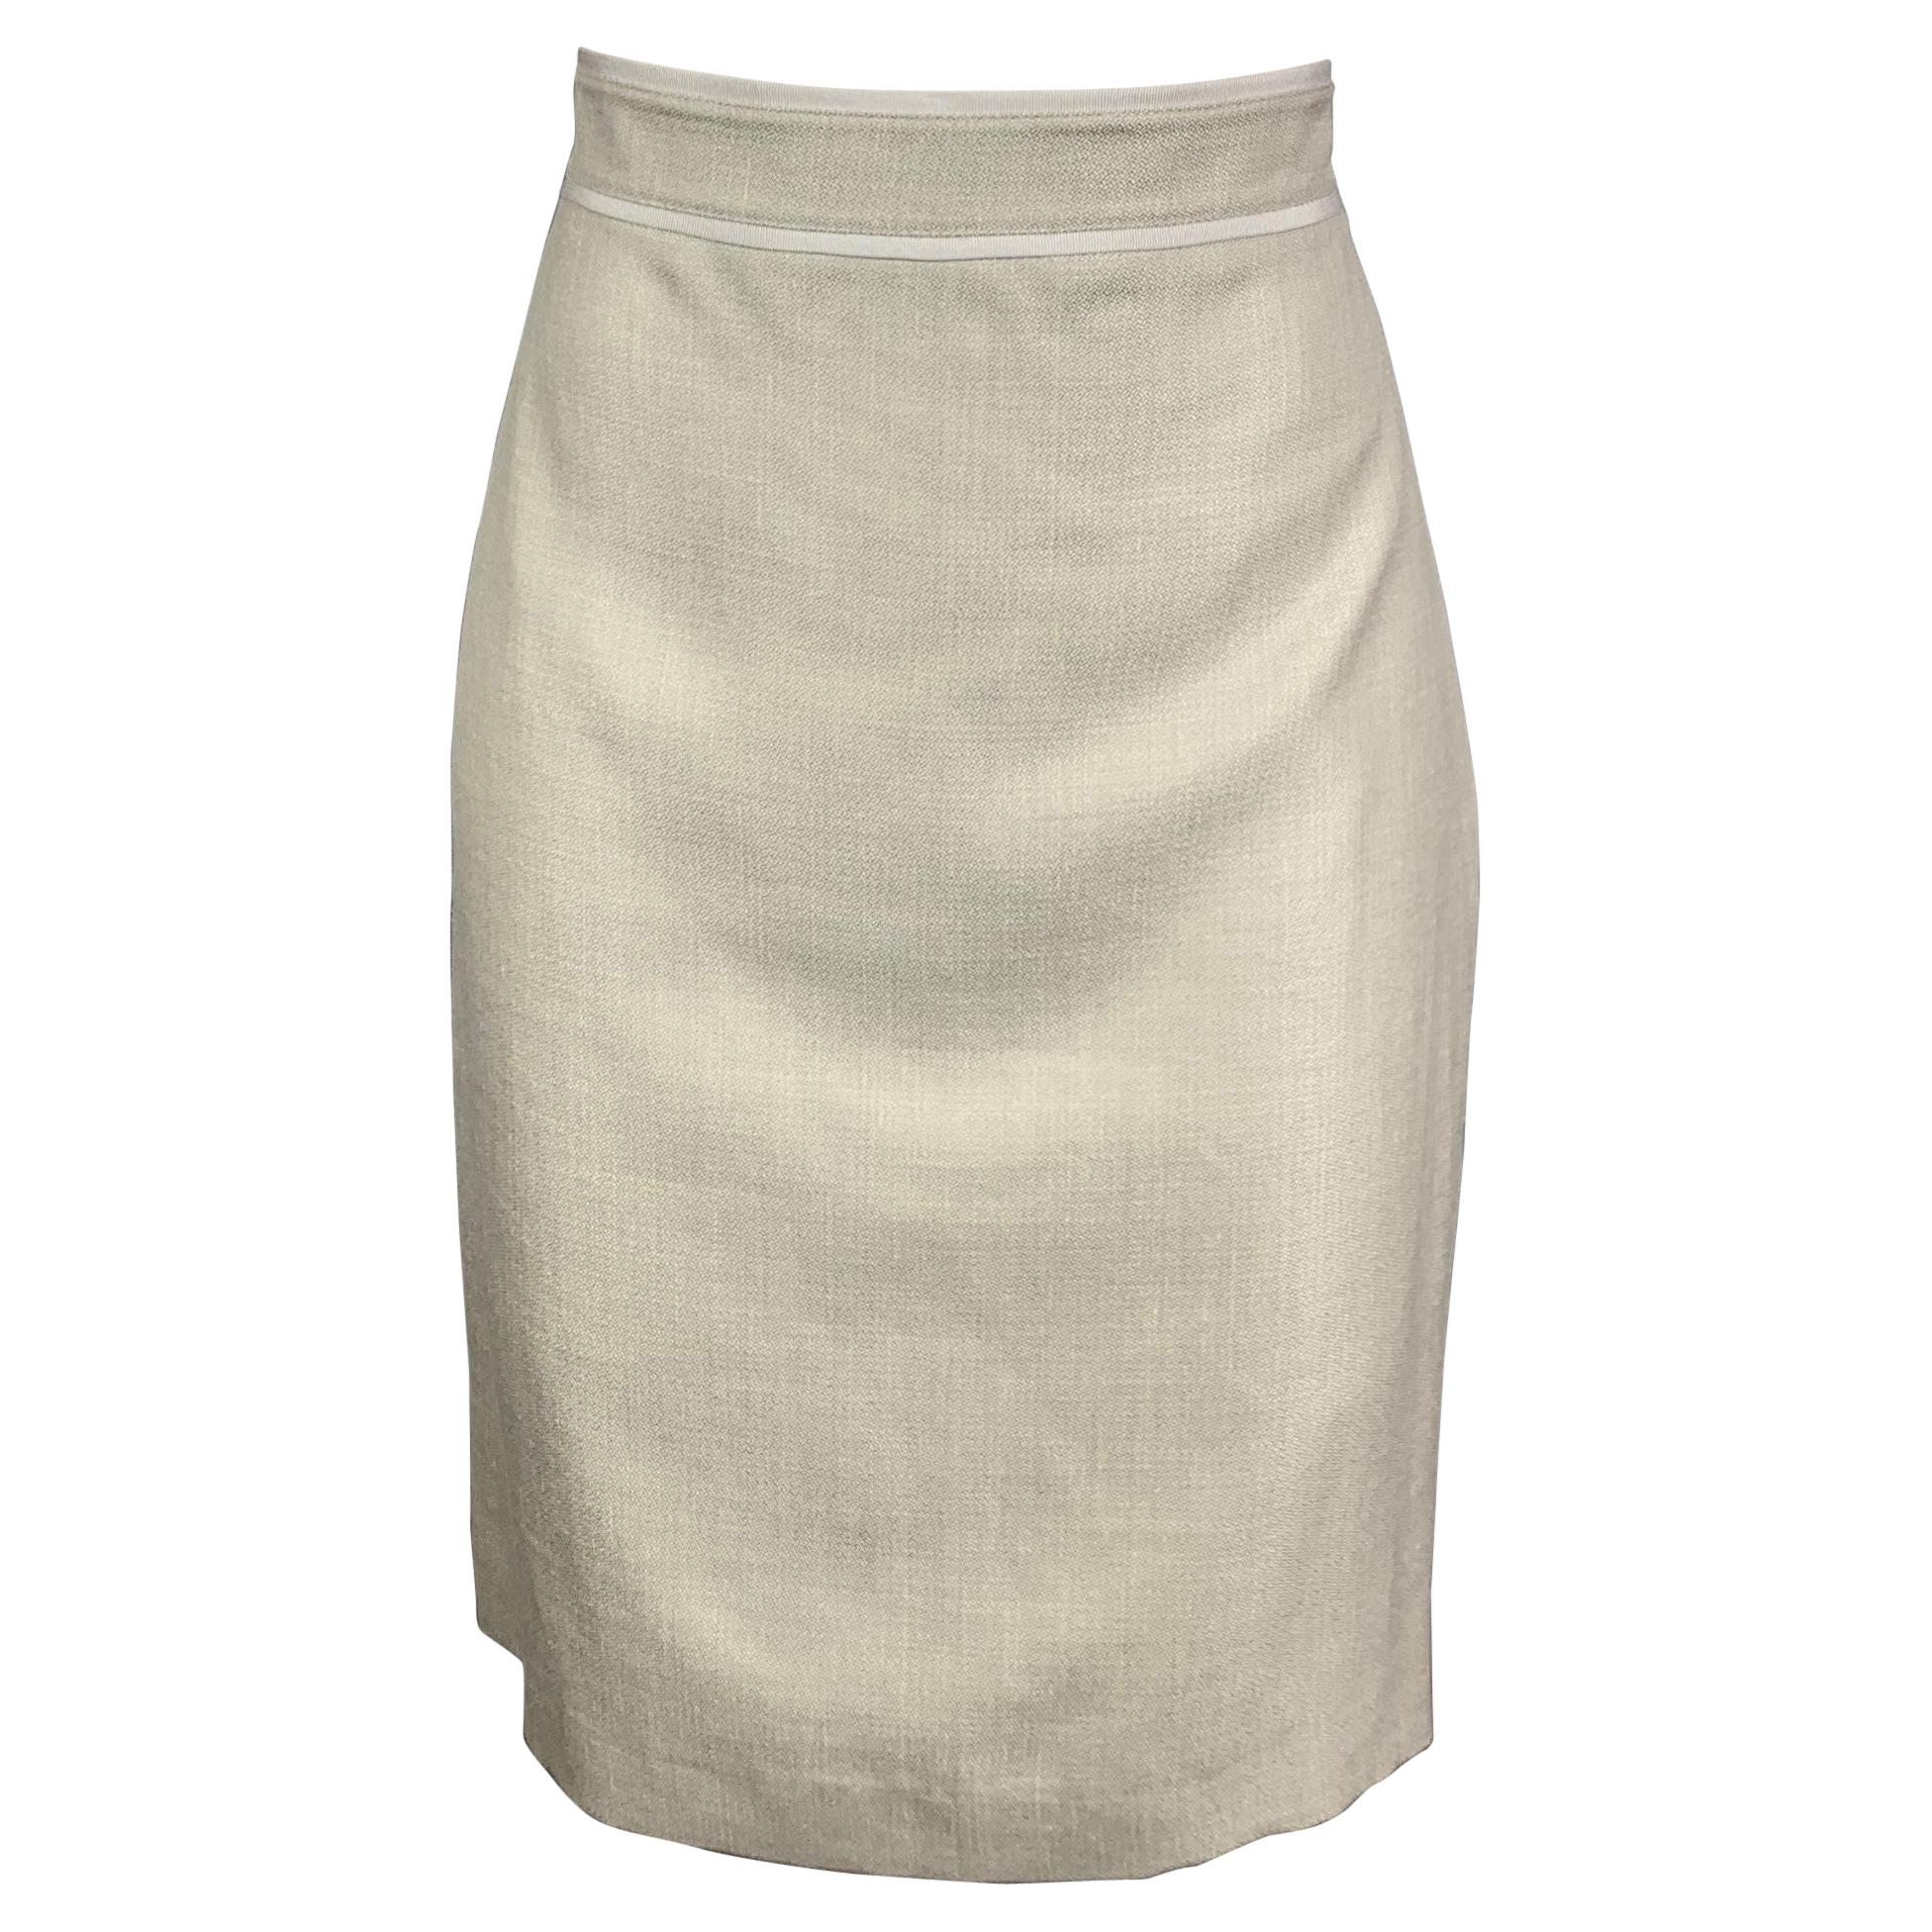 BROOKS BROTHERS Size 6 Light Gray Wool Blend Pencil Skirt